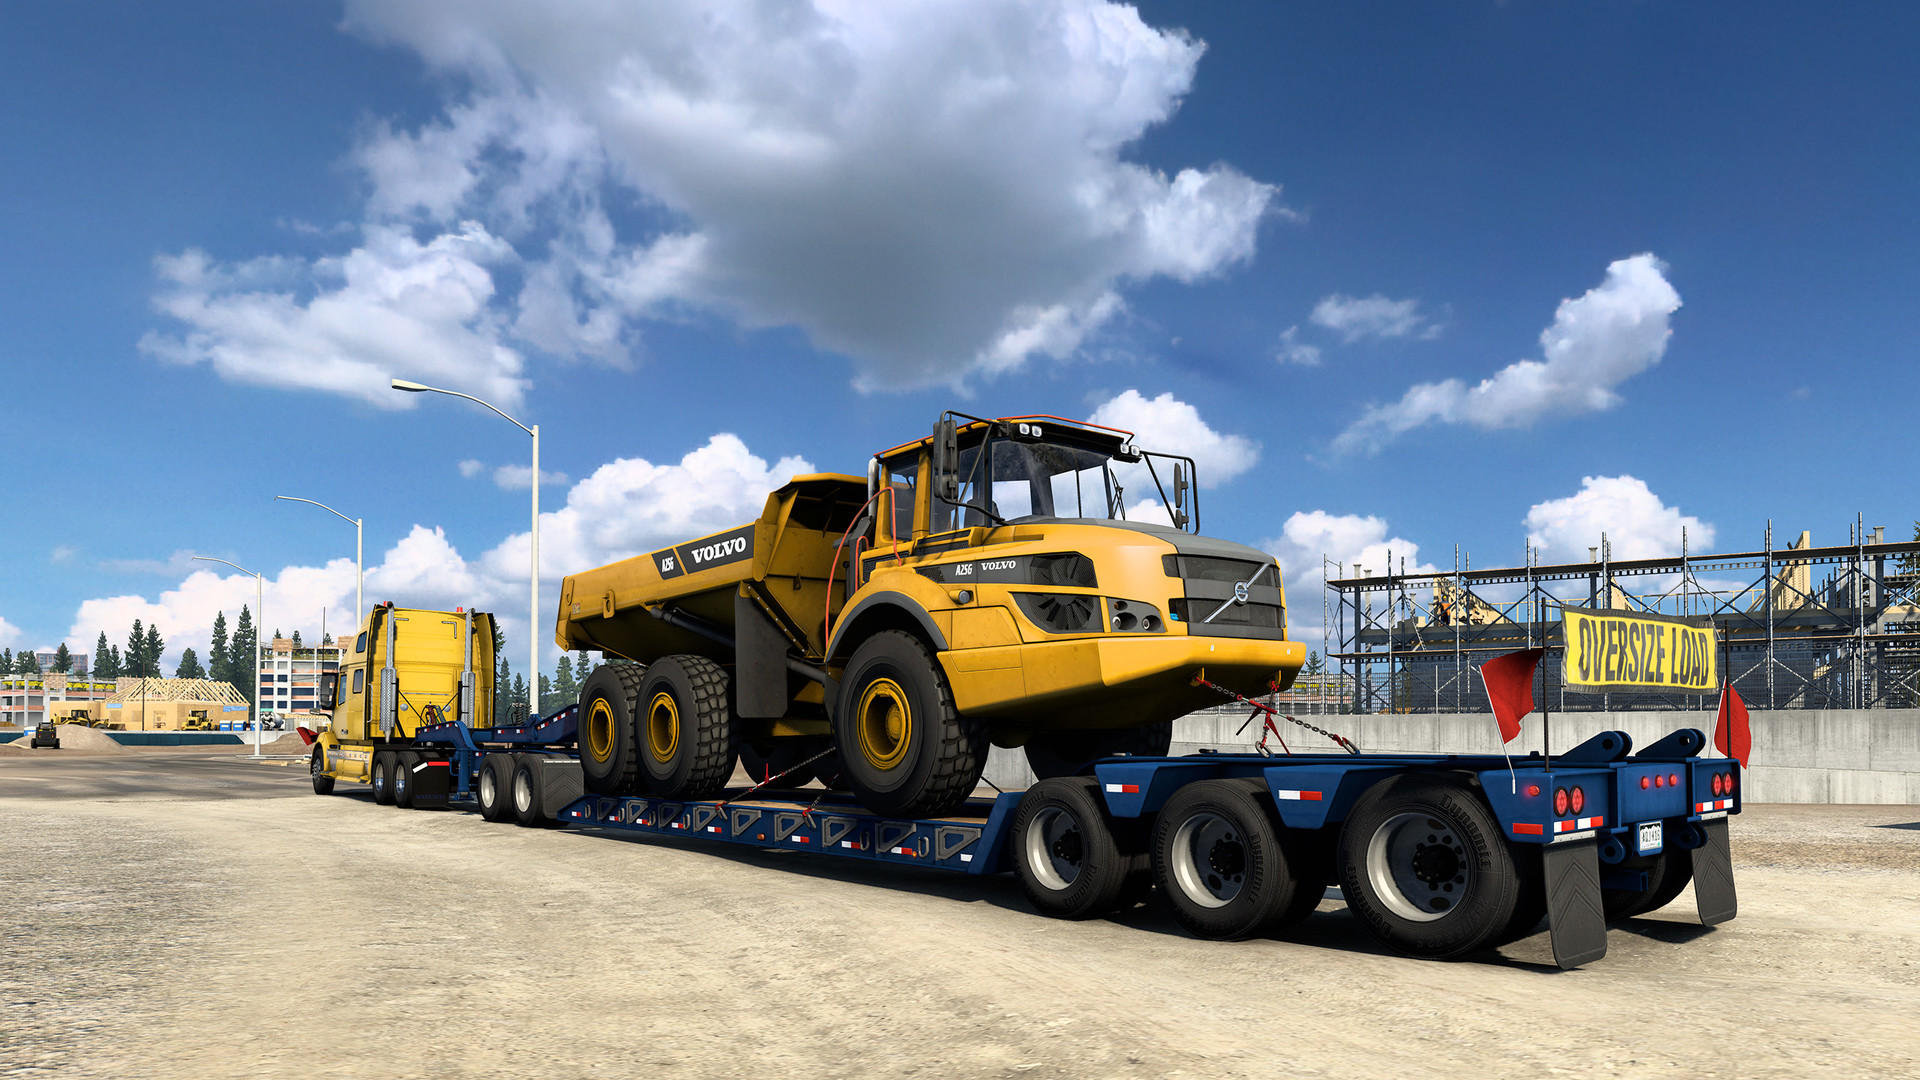 American Truck Simulator - Volvo Construction Equipment DLC Steam Altergift [USD 4.61]